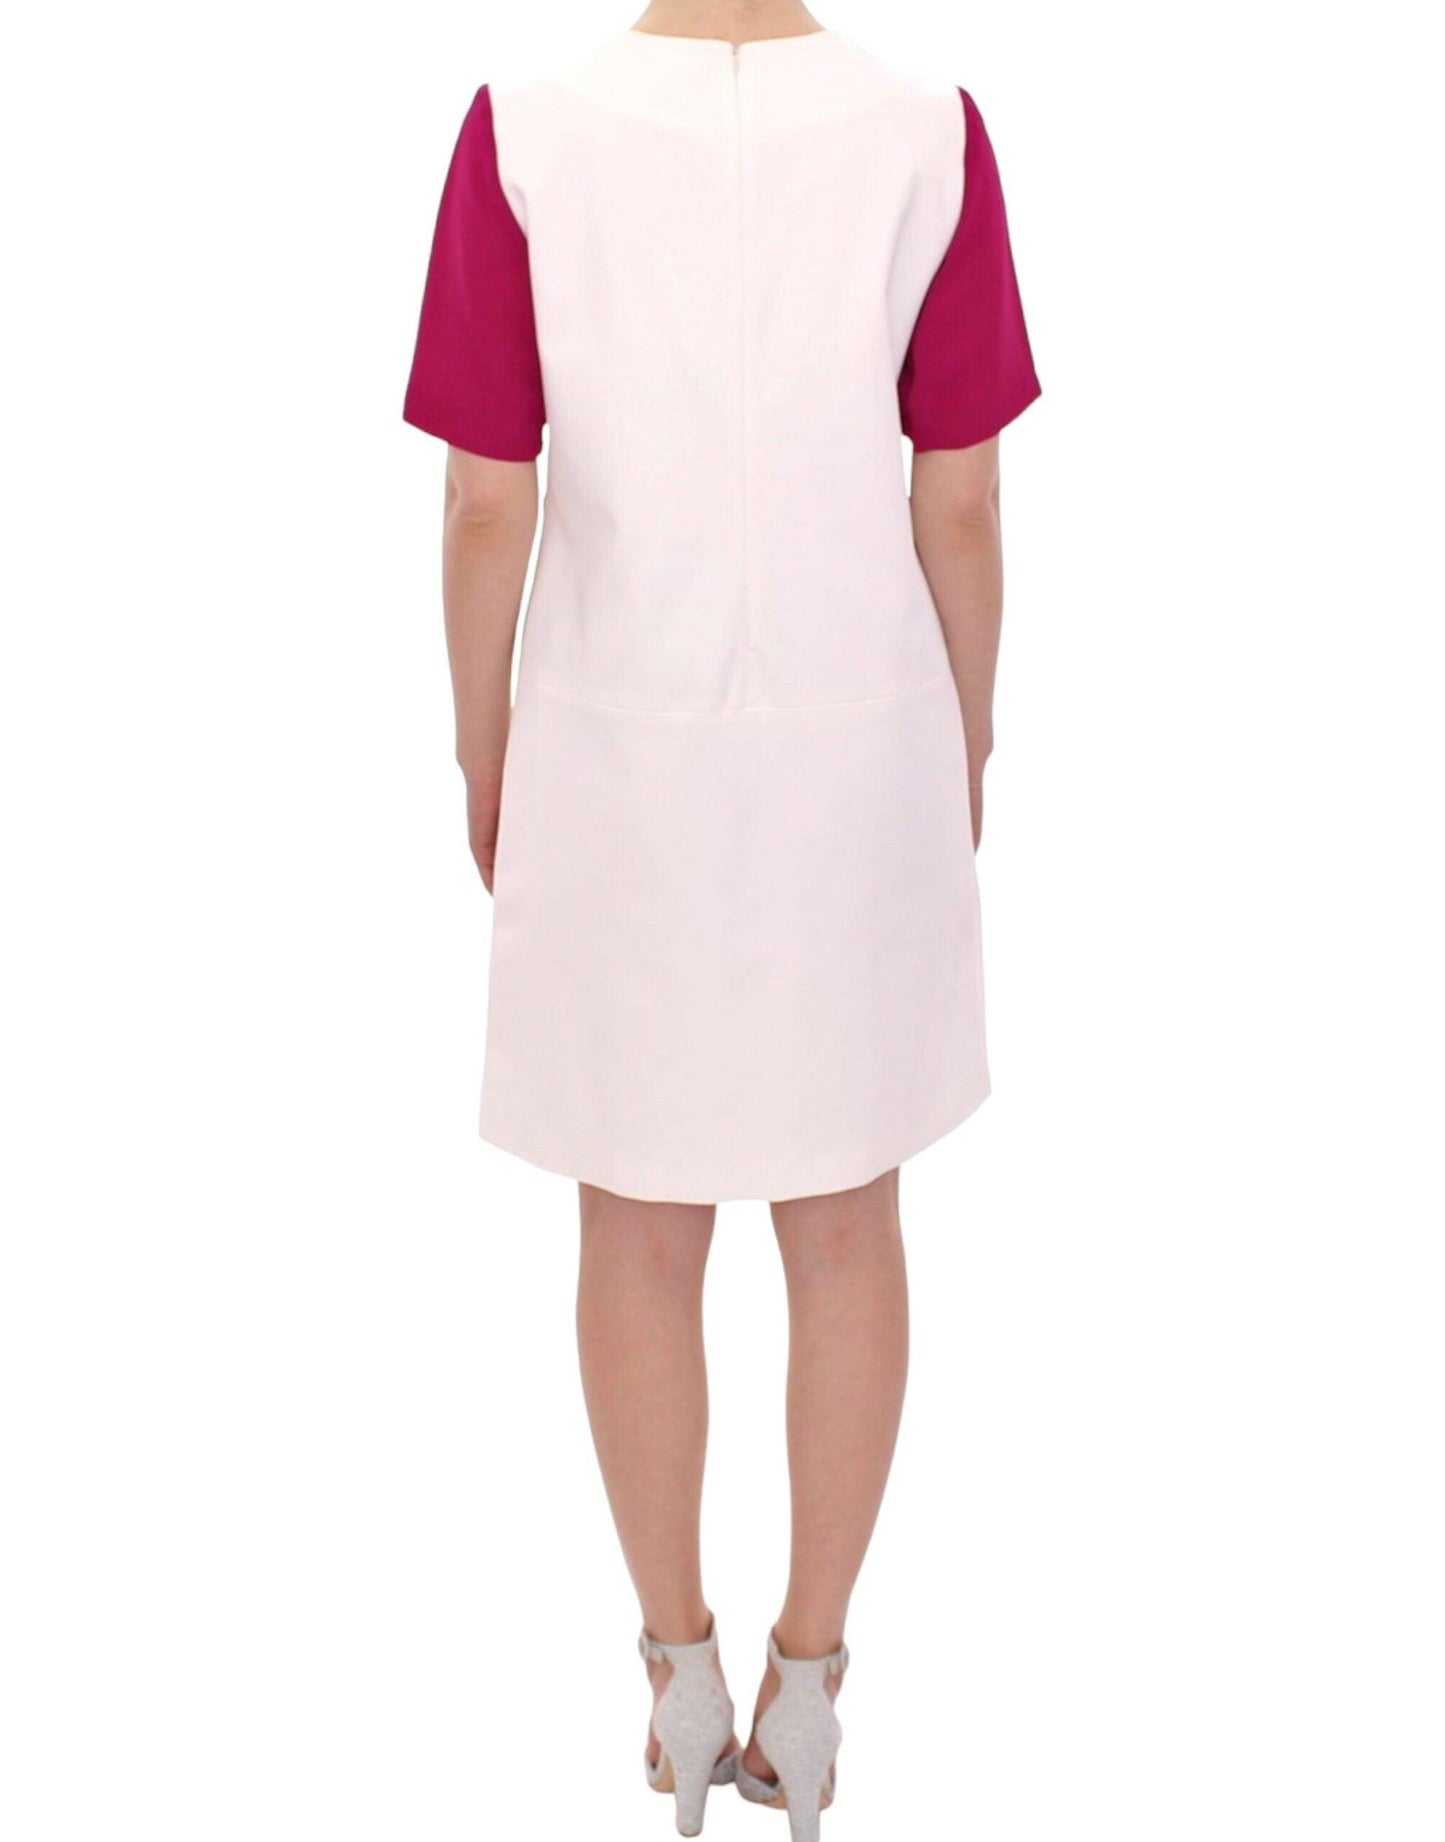 CO|TE Chic White and Pink Shift Robot Dress - PER.FASHION